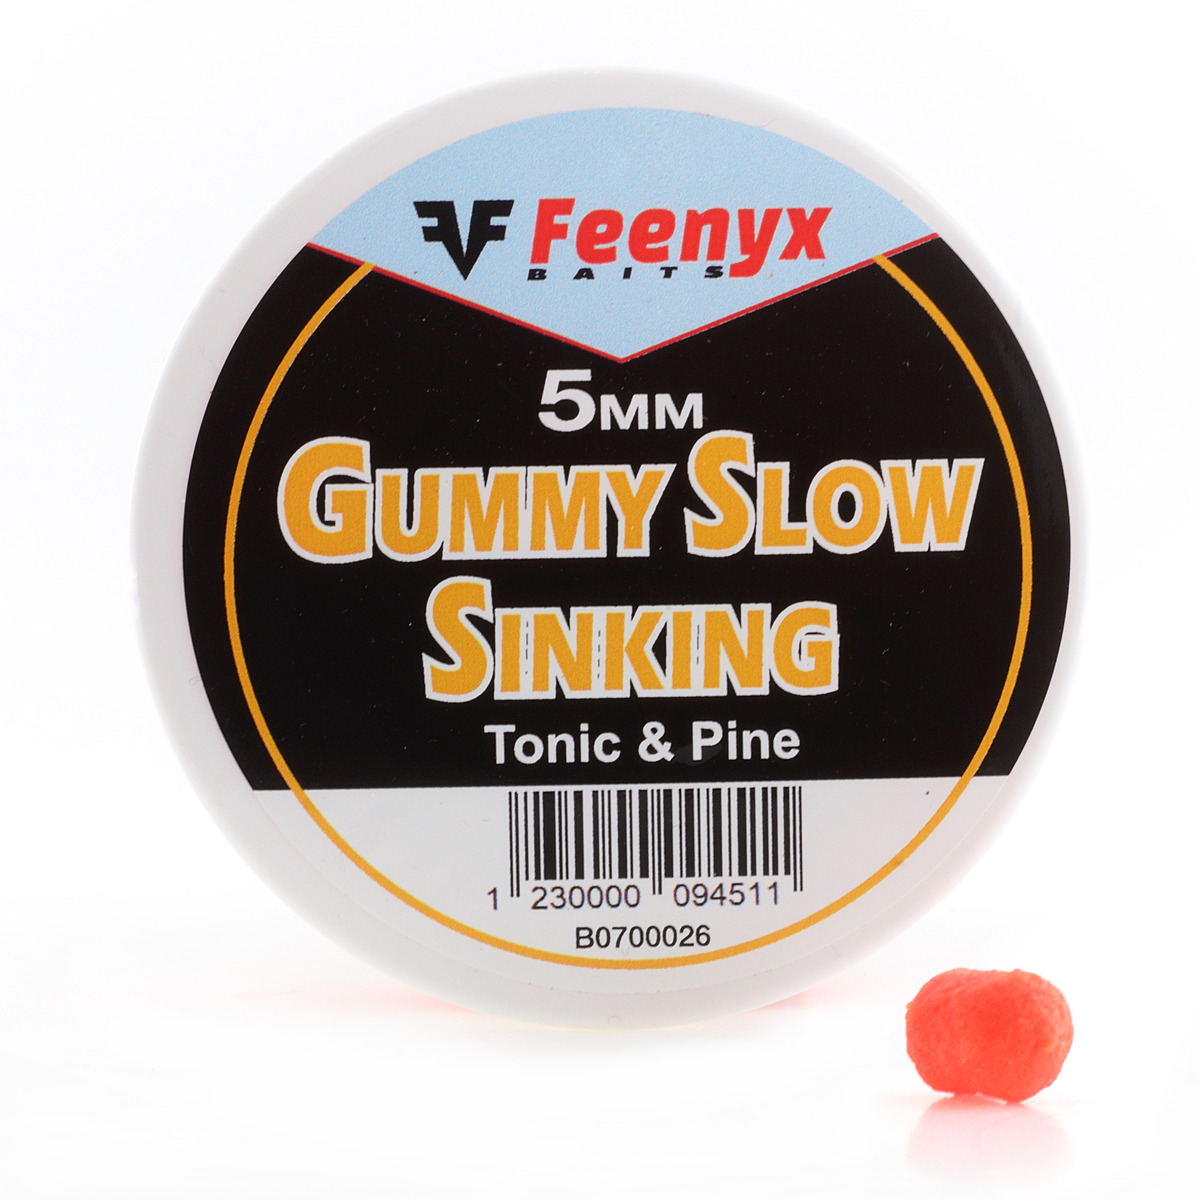 Feenyx Gummy Slow Sinking Tonic & Pine - 5 mm